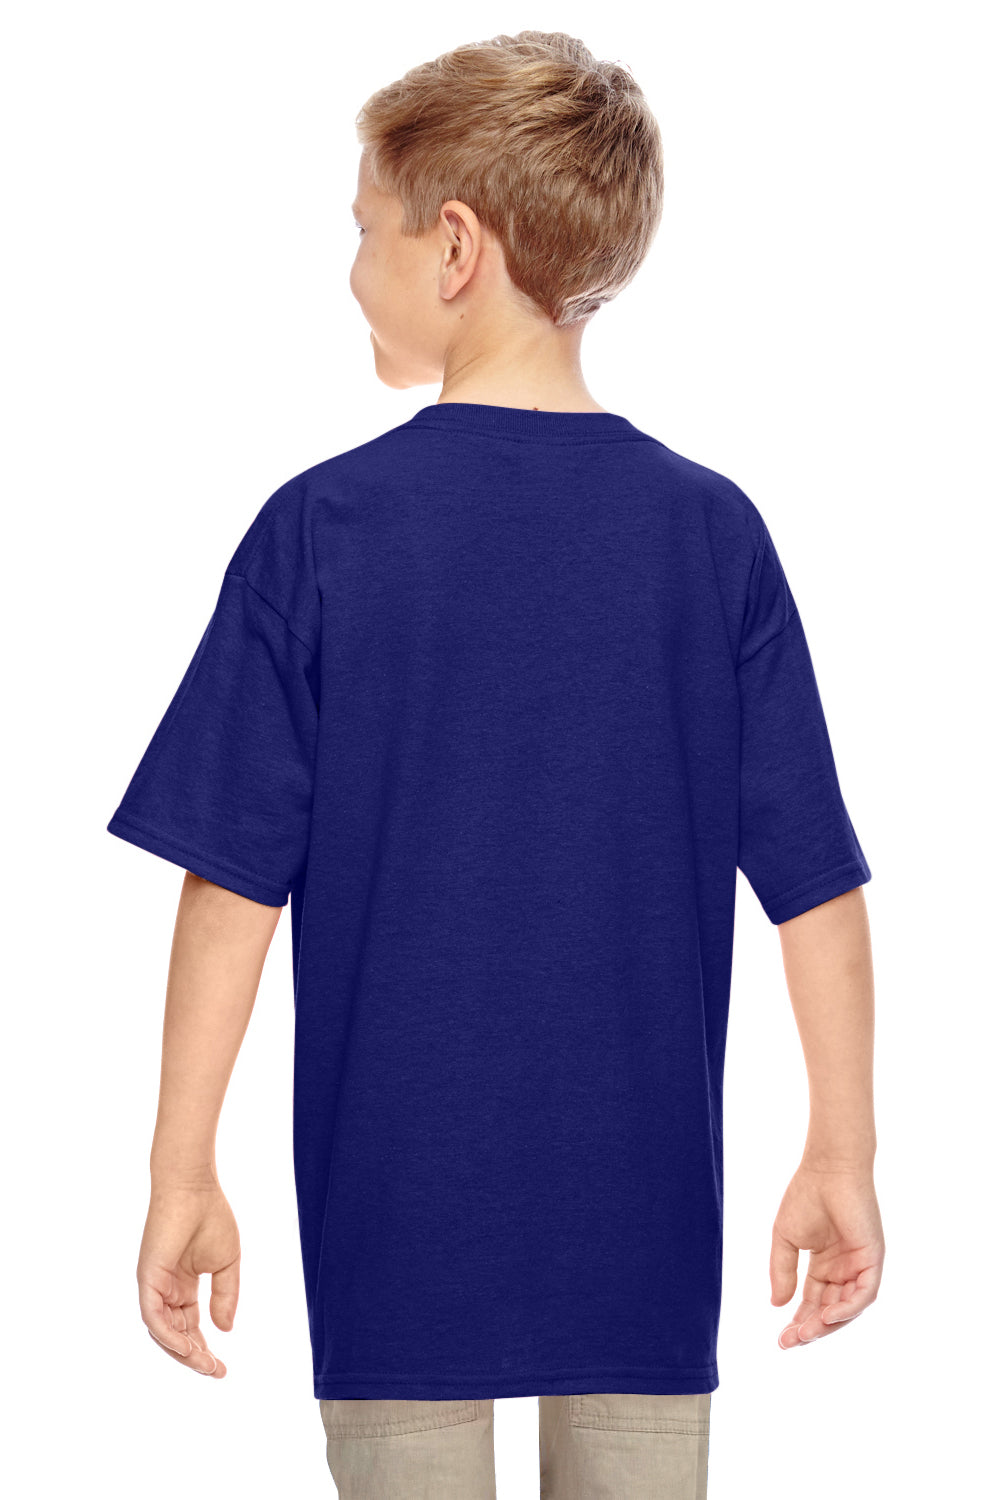 Gildan G500B Youth Short Sleeve Crewneck T-Shirt Neon Blue Back